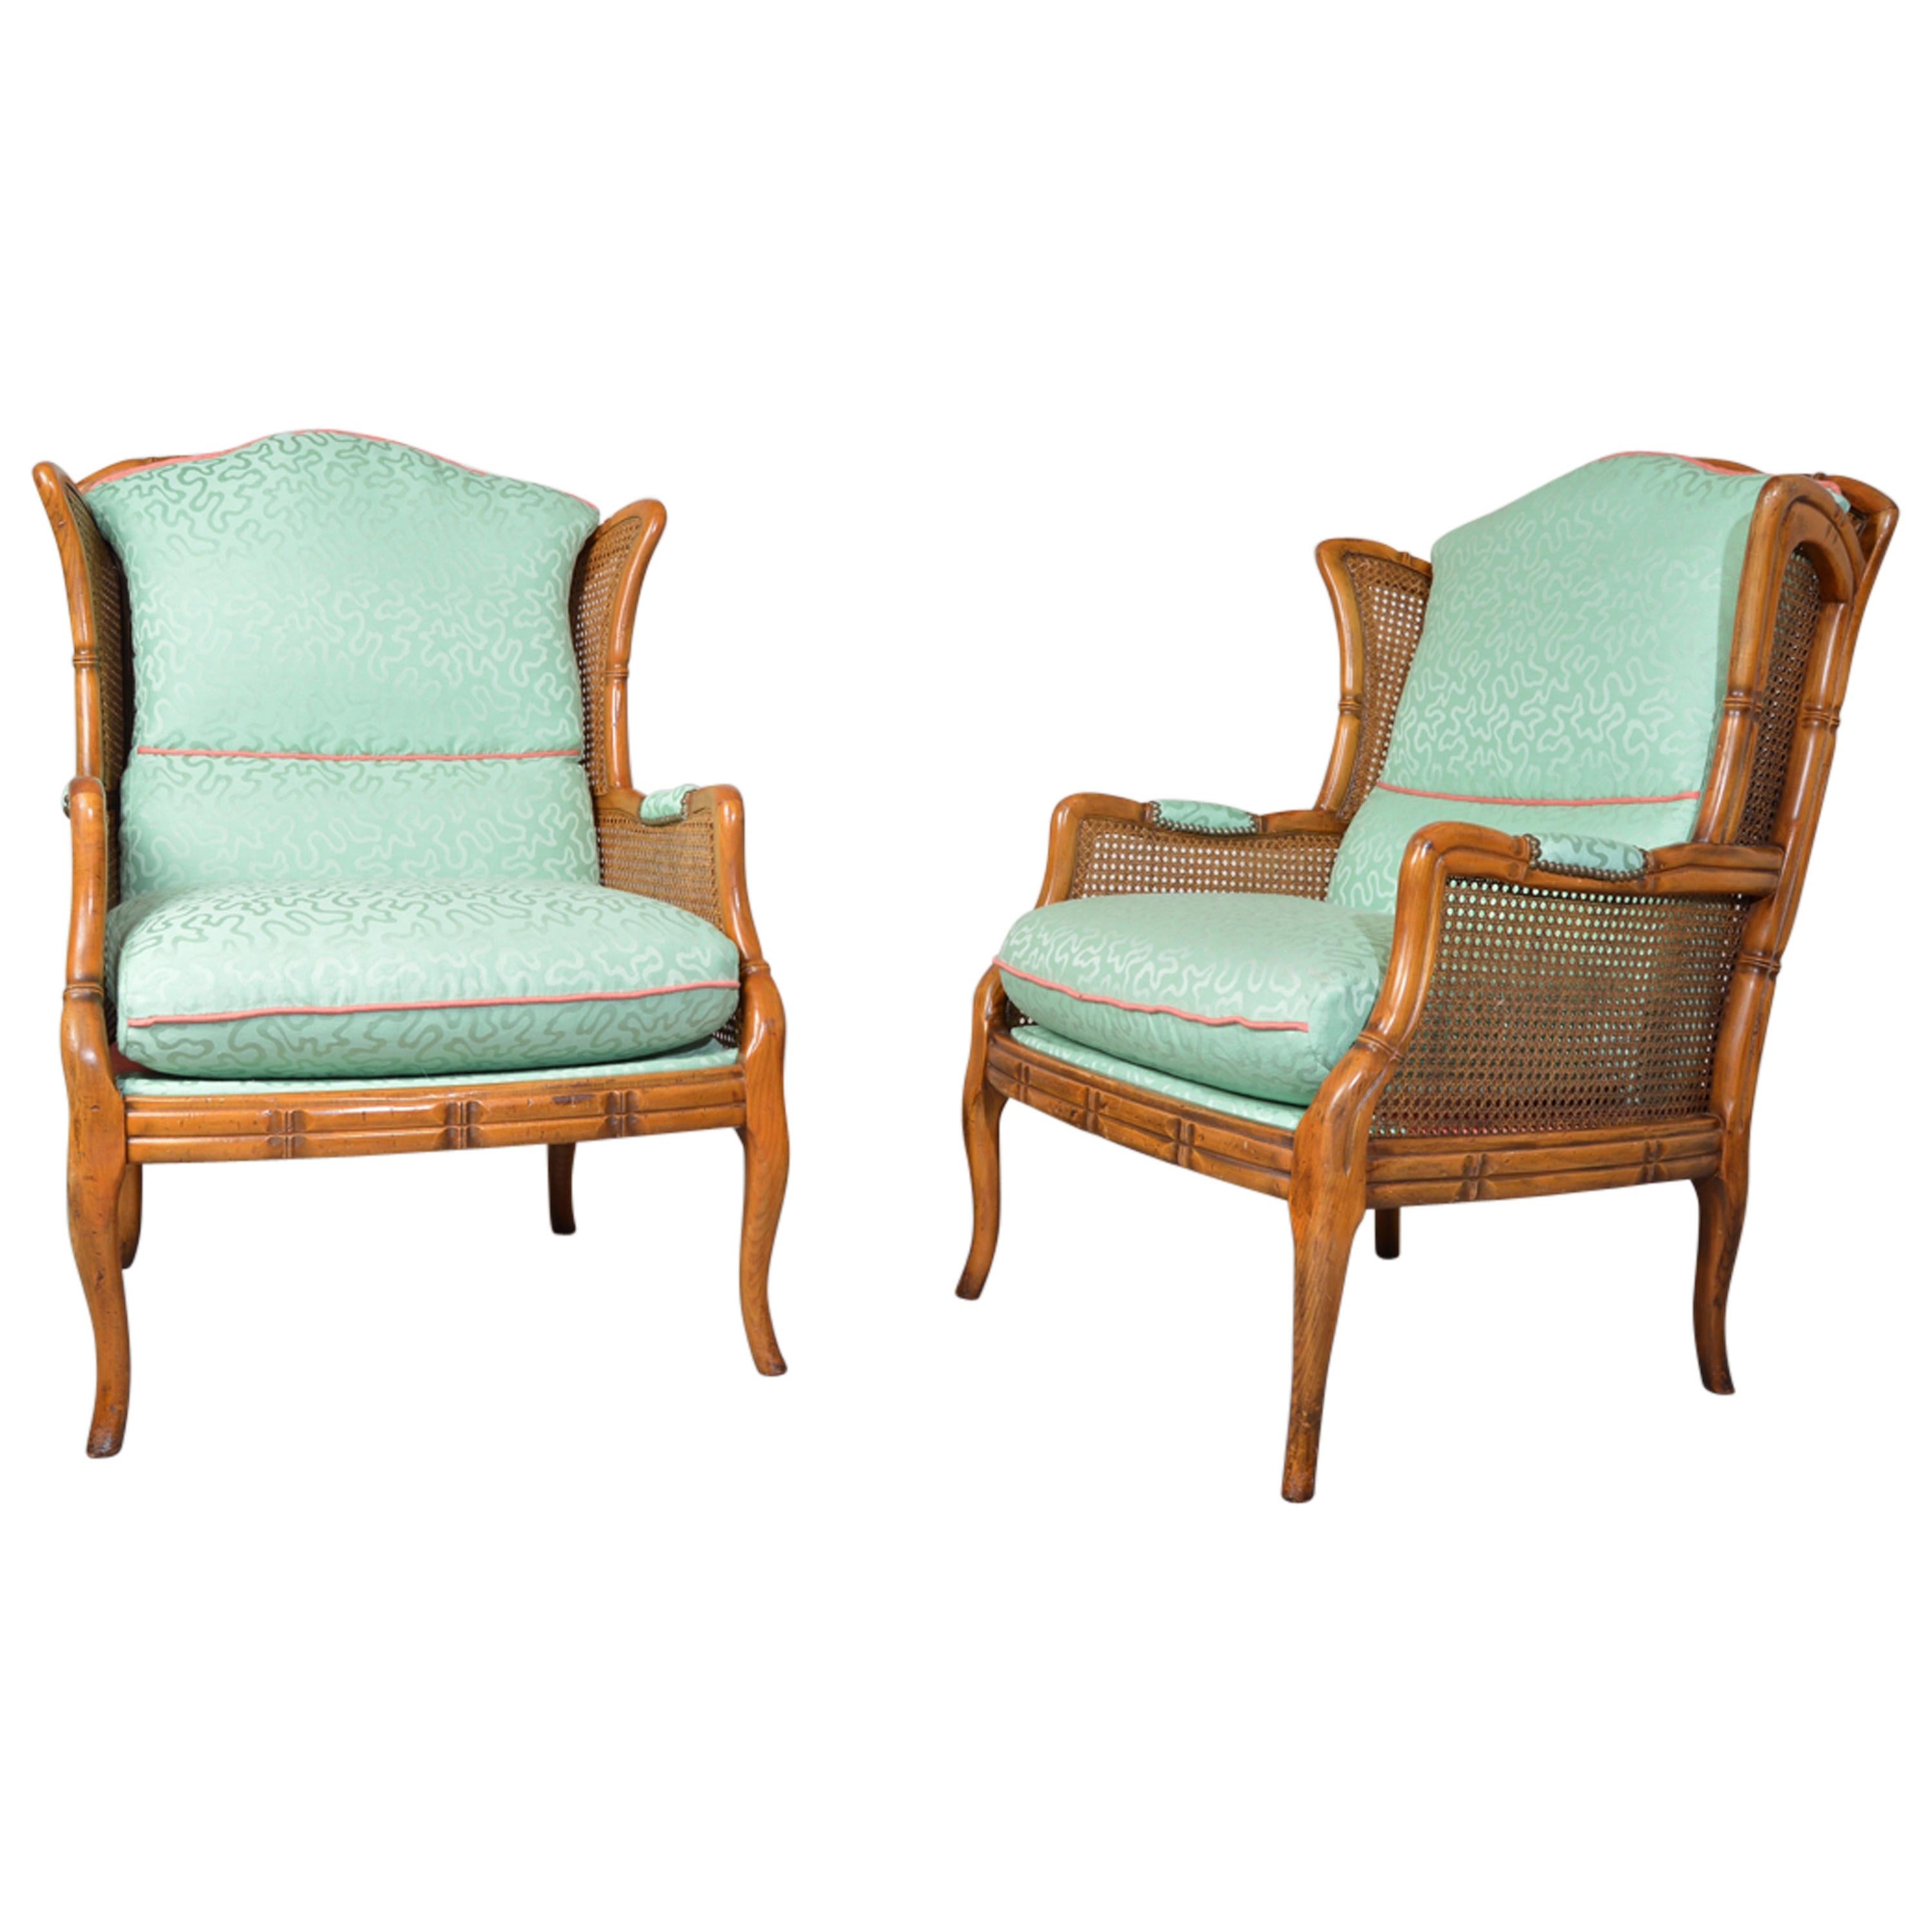 Vintage Midcentury Regency Style Faux Bamboo Boho Cane Wingback Chairs